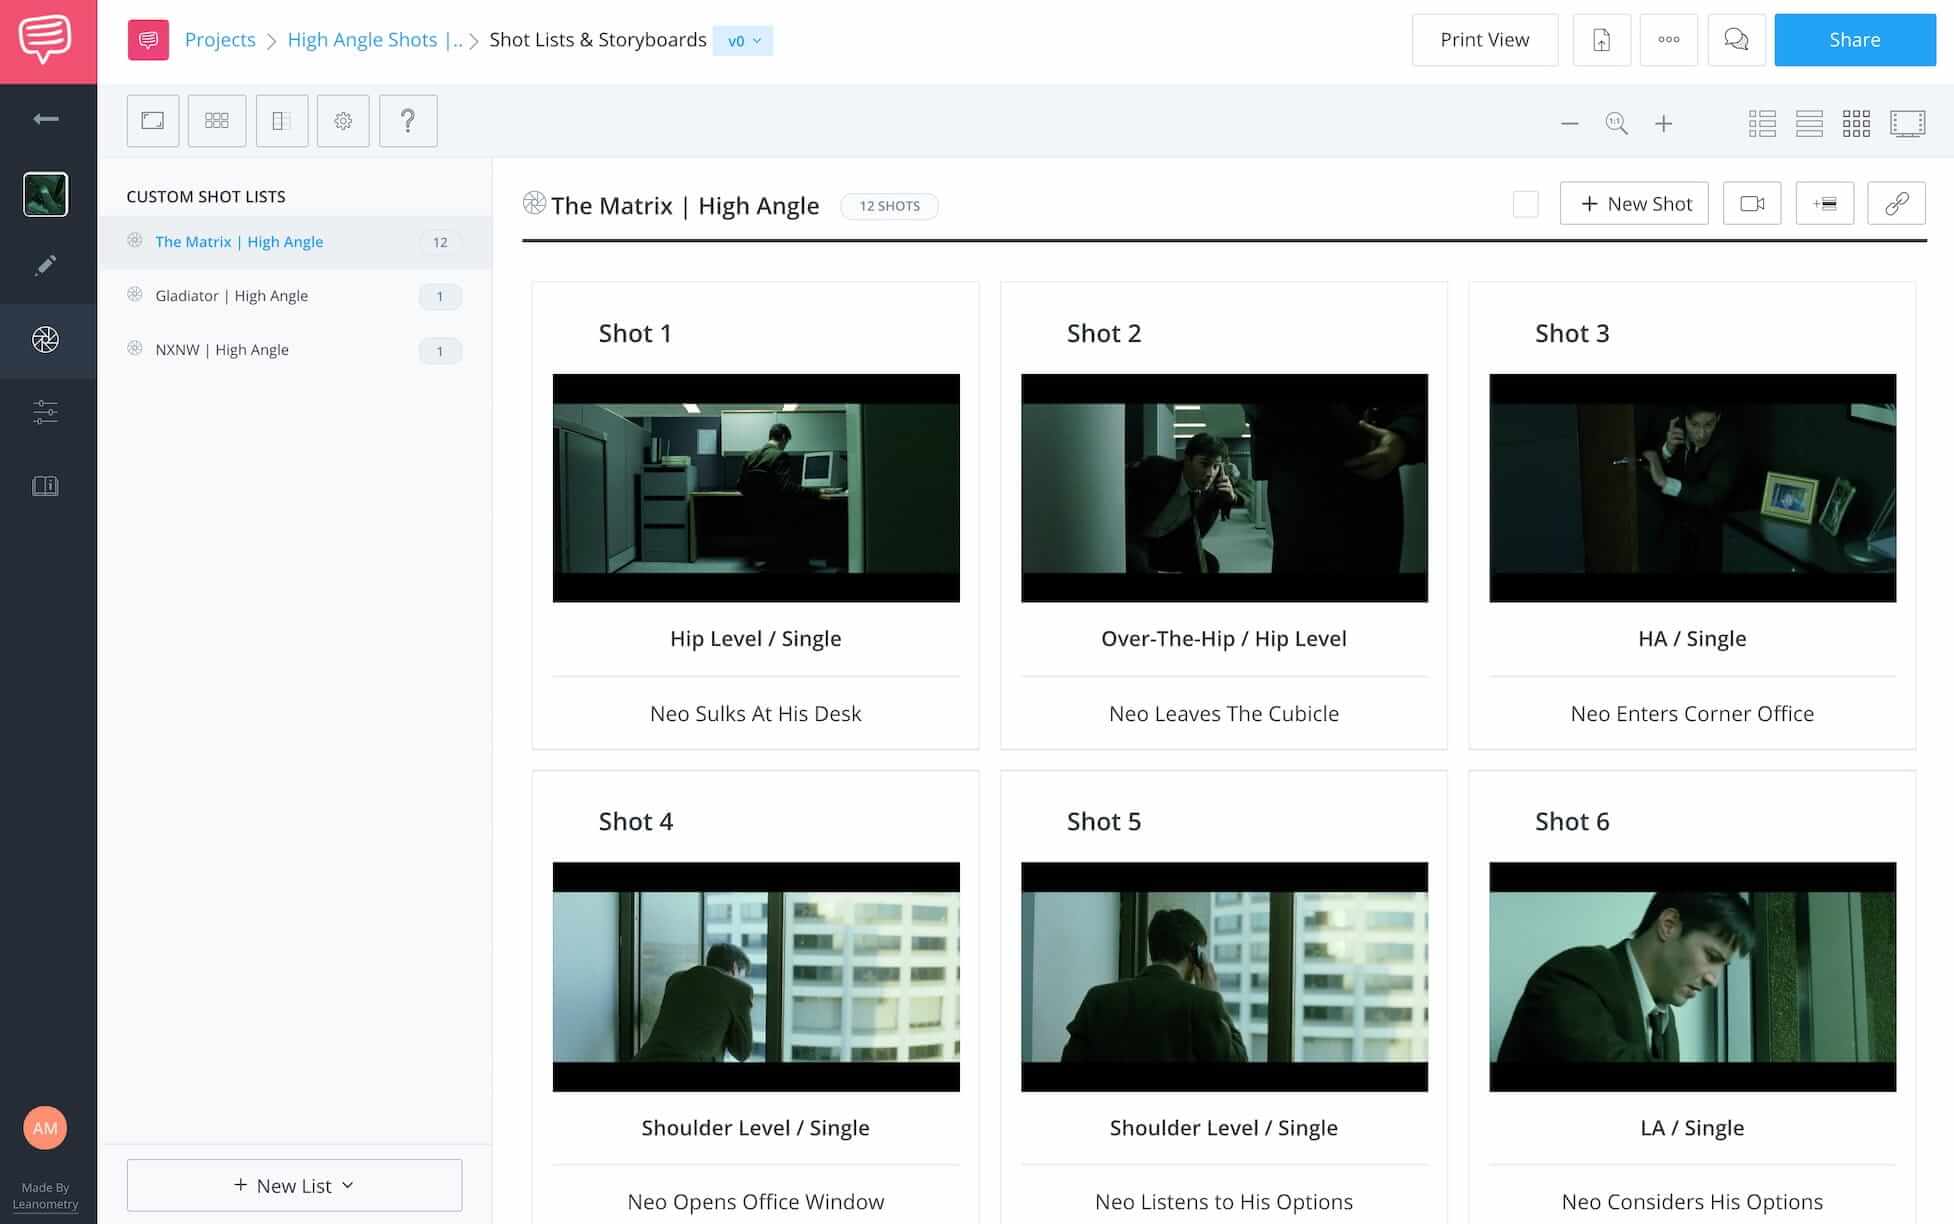 High Angle Shot - The Matrix - StudioBinder Online Shot List Software